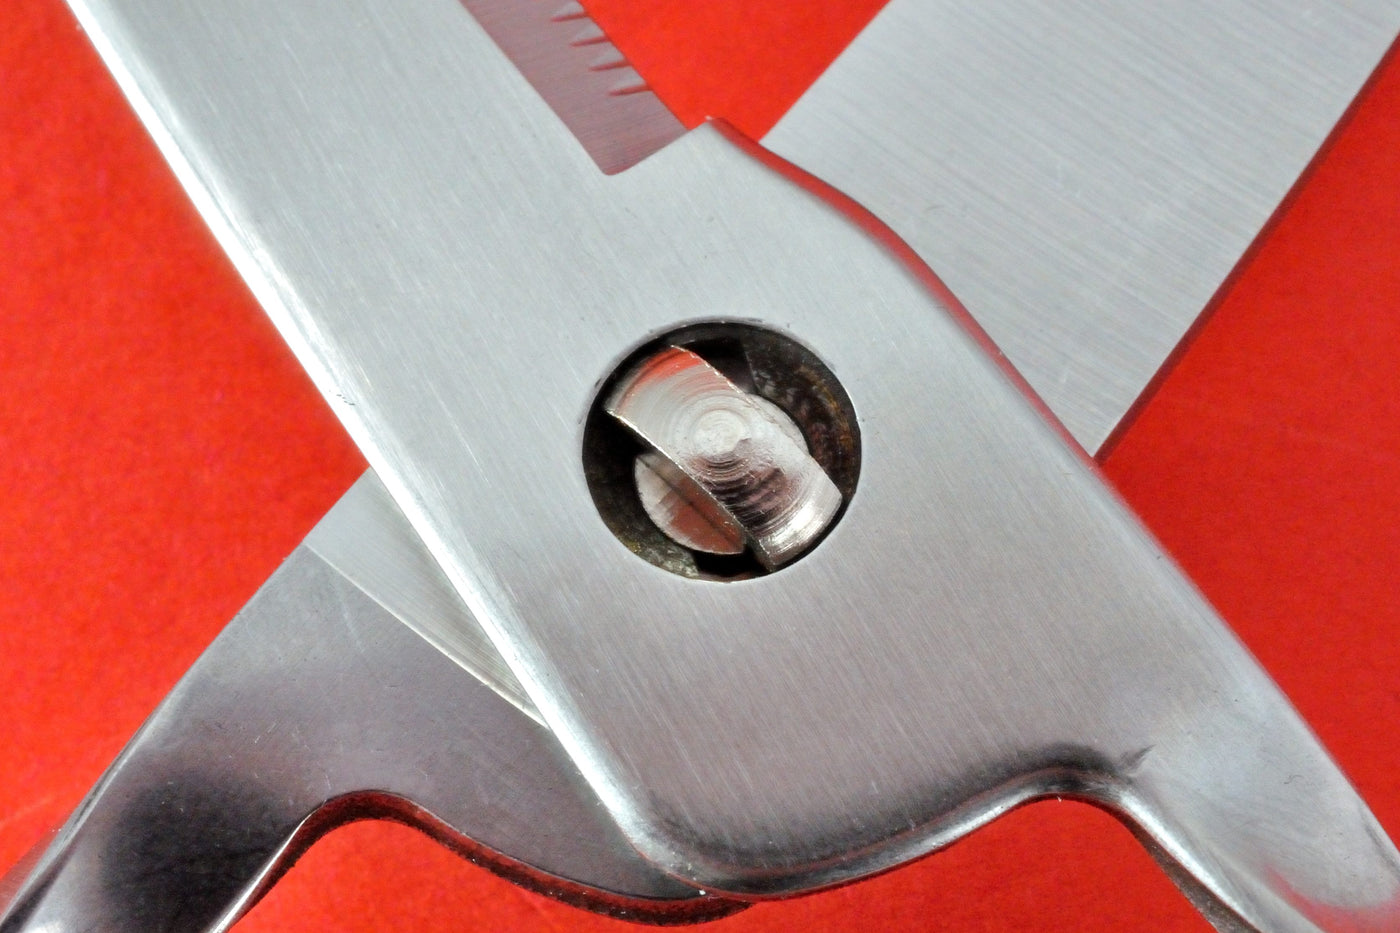 Kiyotsuna Japan  Japanese Kitchen Shears / Scissors – ProTooling